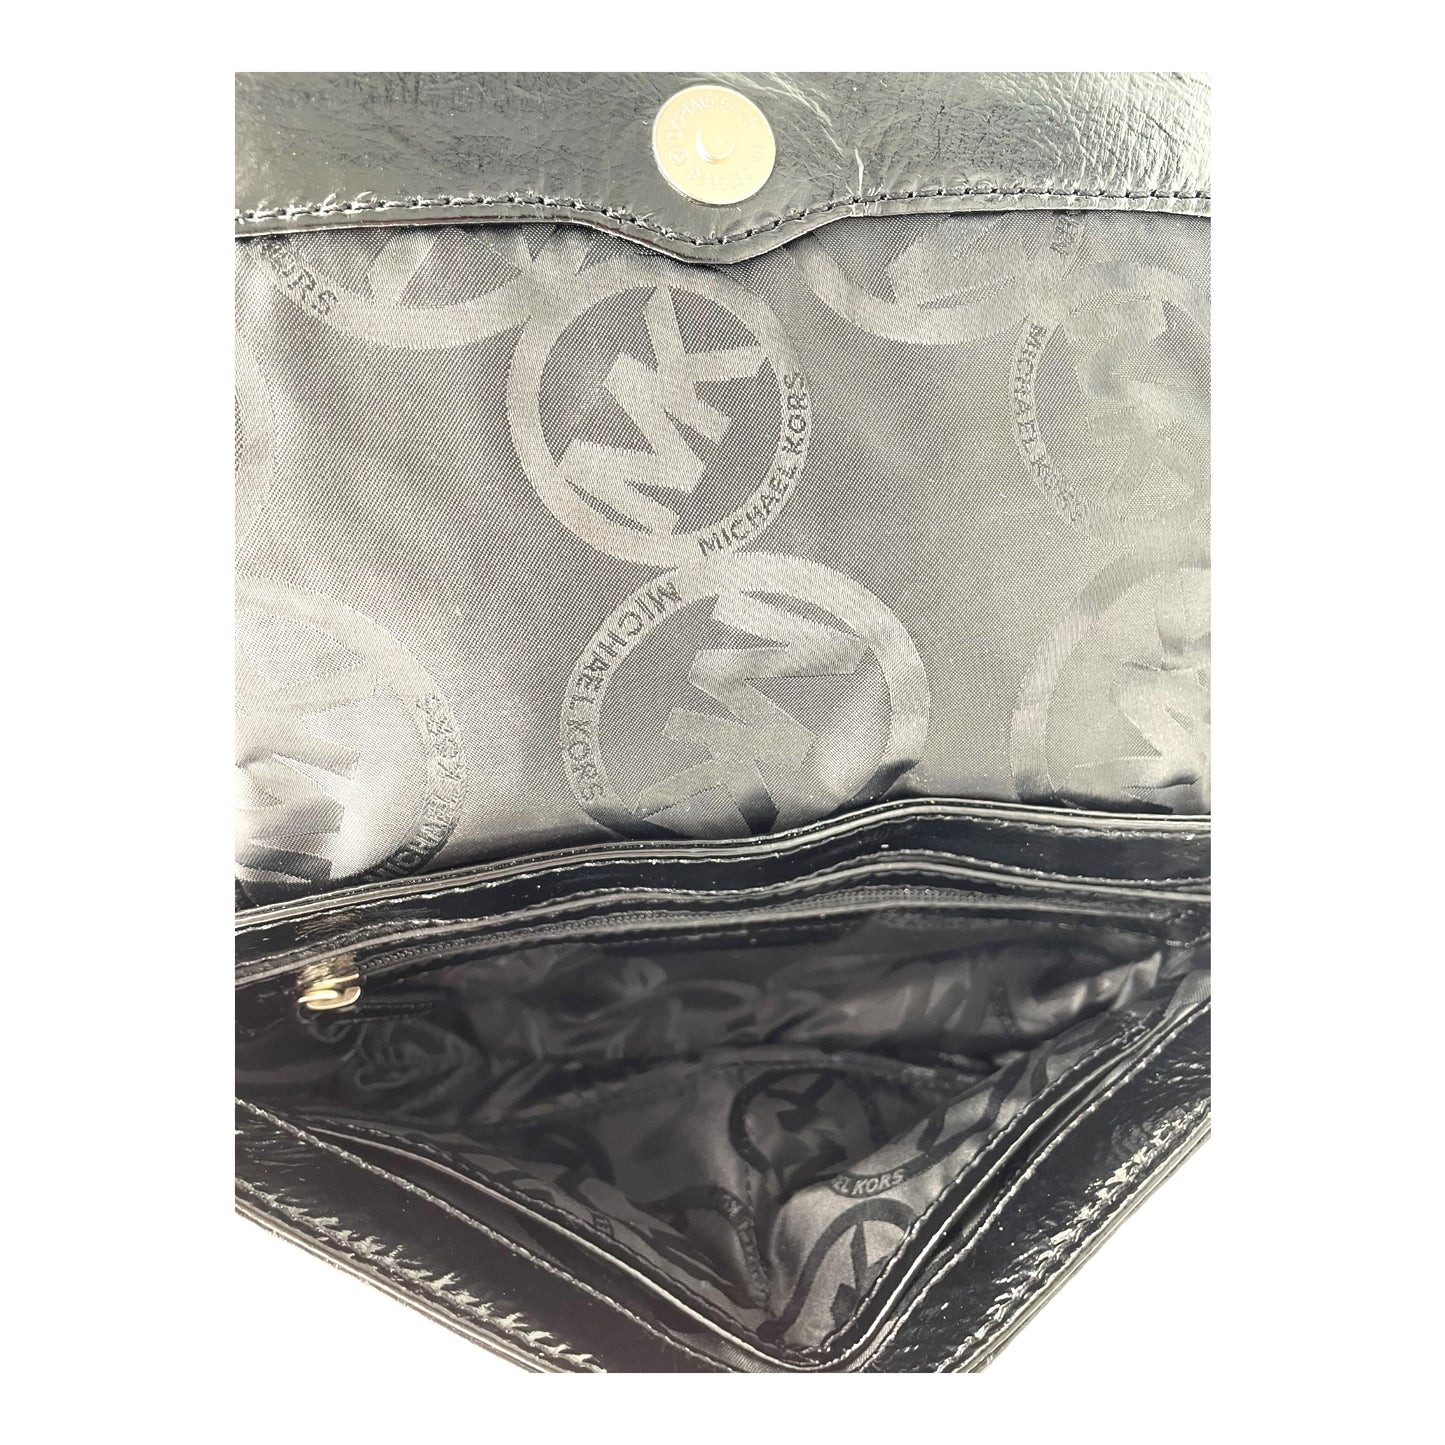 Michael Kors Hamilton Patent Leather Small Flap Gunmetal Shoulder Bag